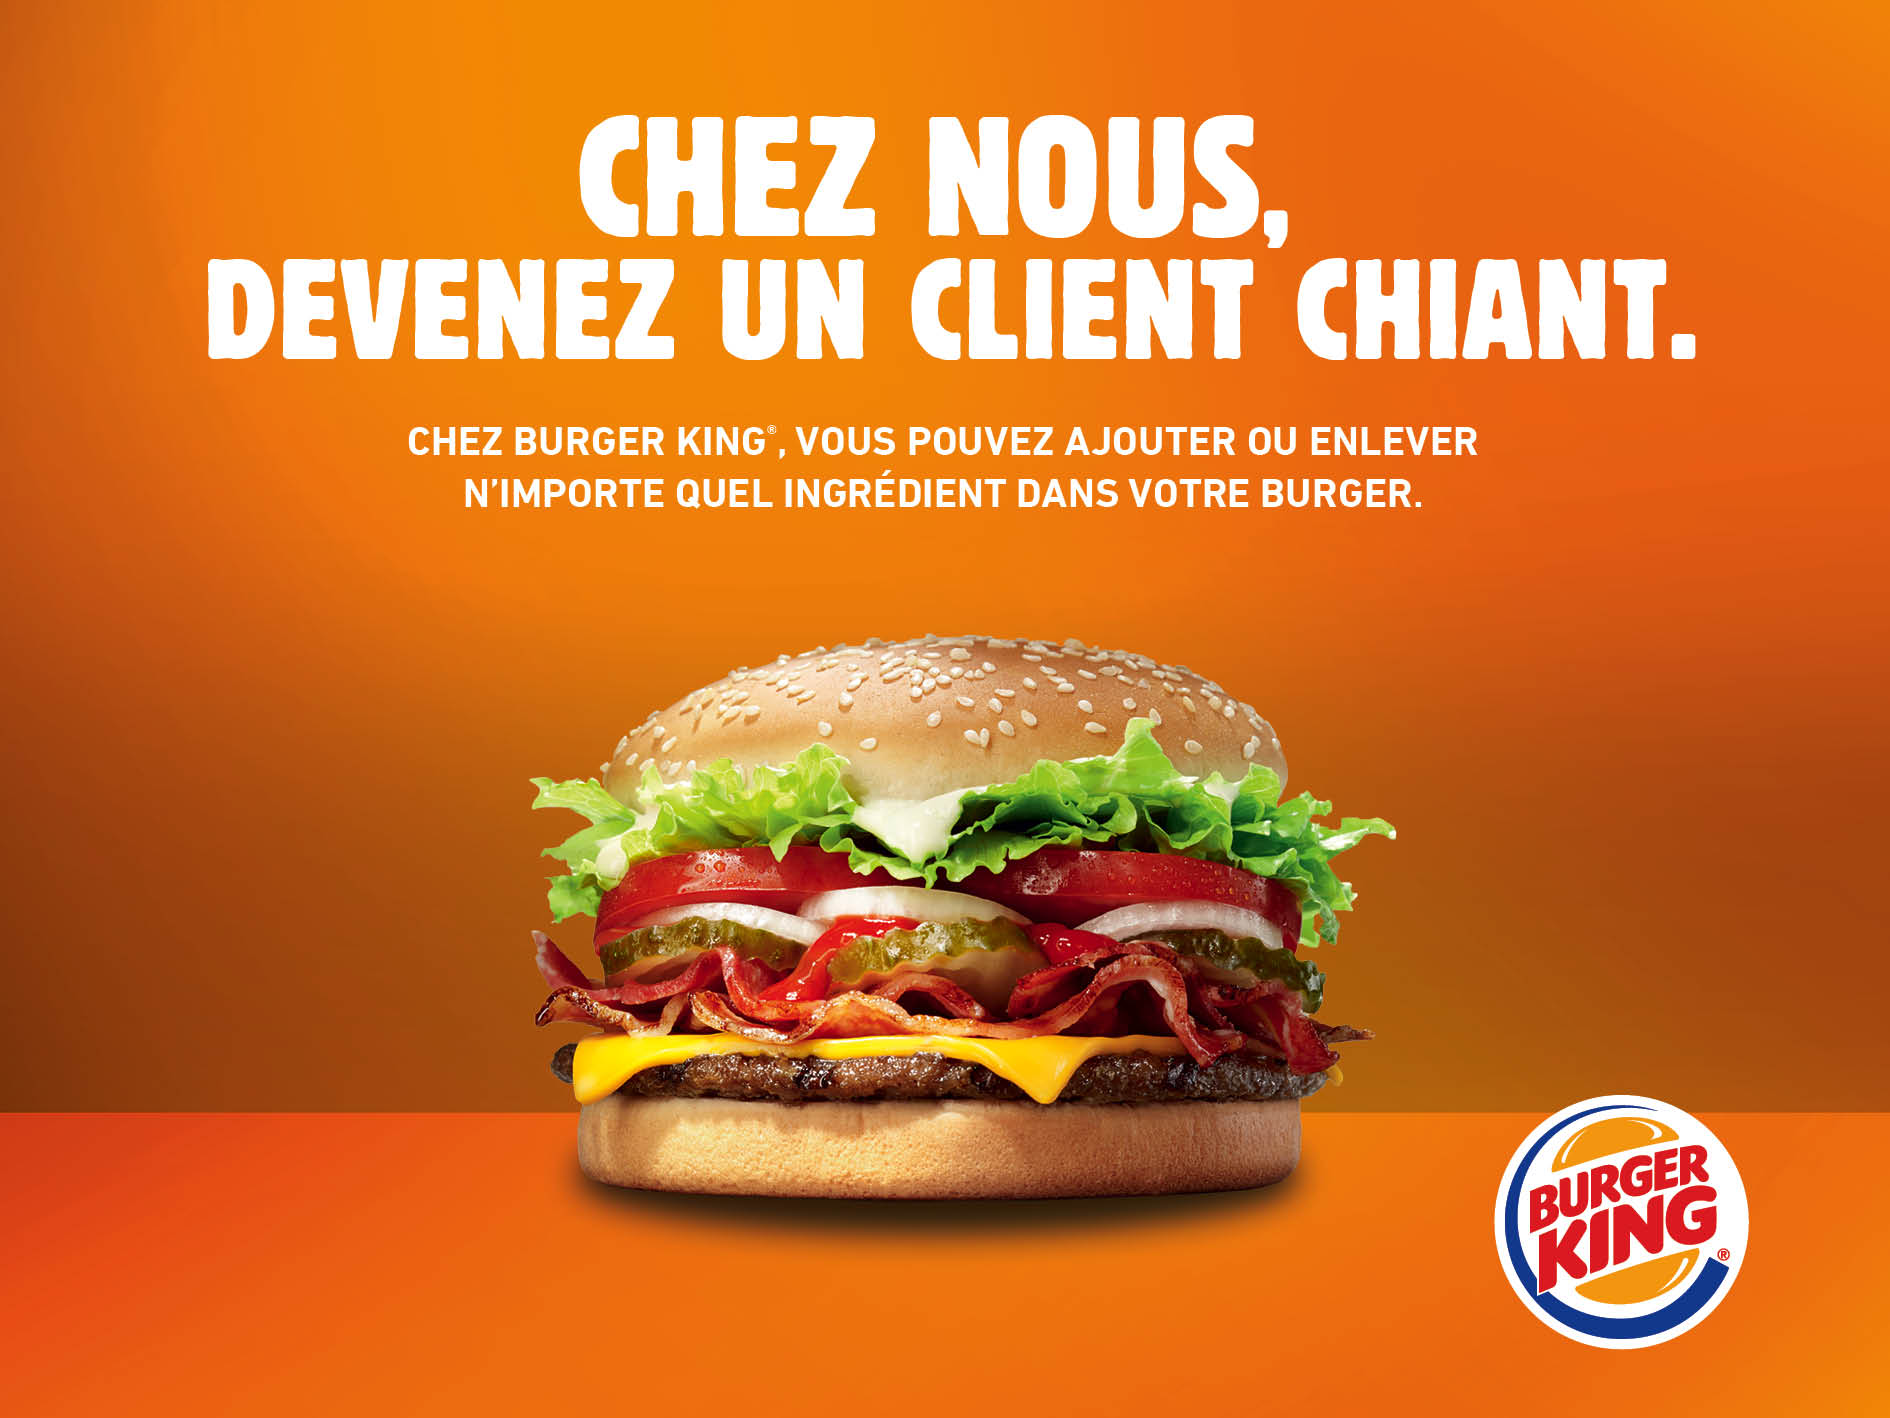 burger-king-publicite-marketing-fast-food-burger-ingredients-client-chiant-novembre-2015